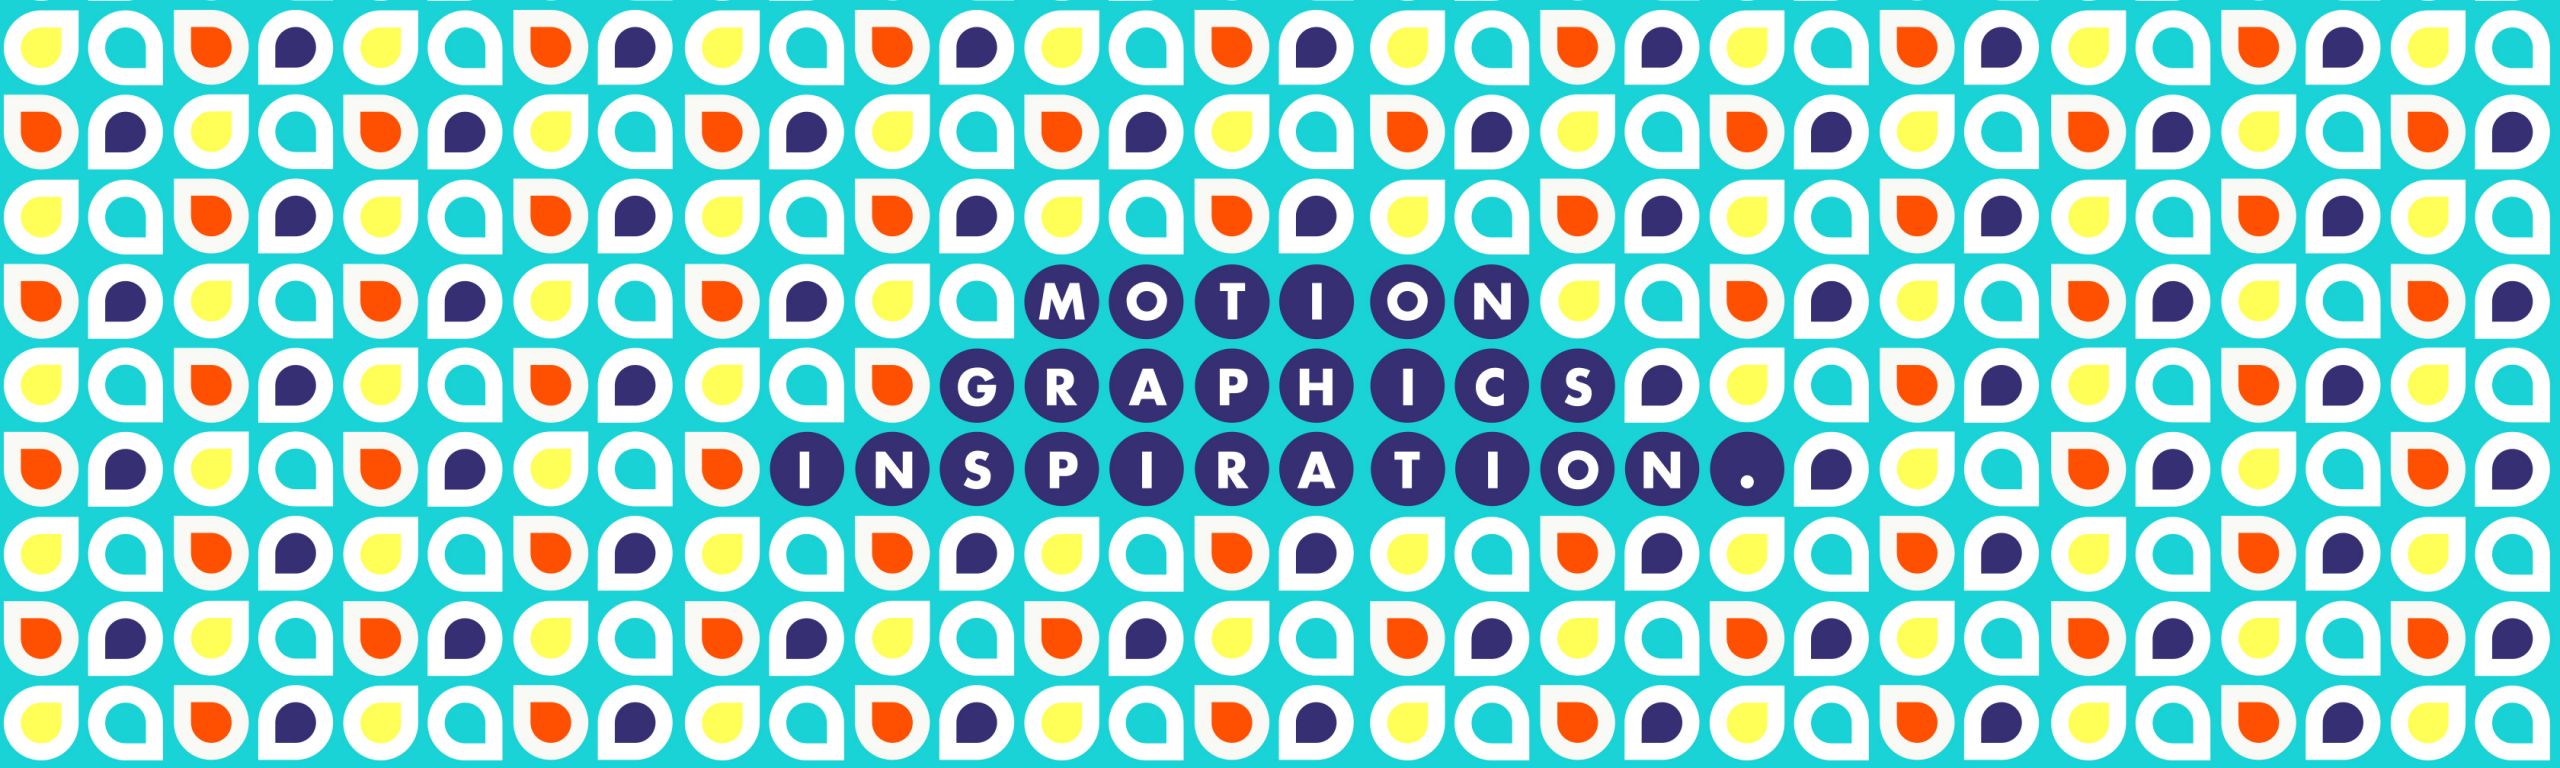 Motion-Graphics-Inspiration-BG-2560x768-c-default